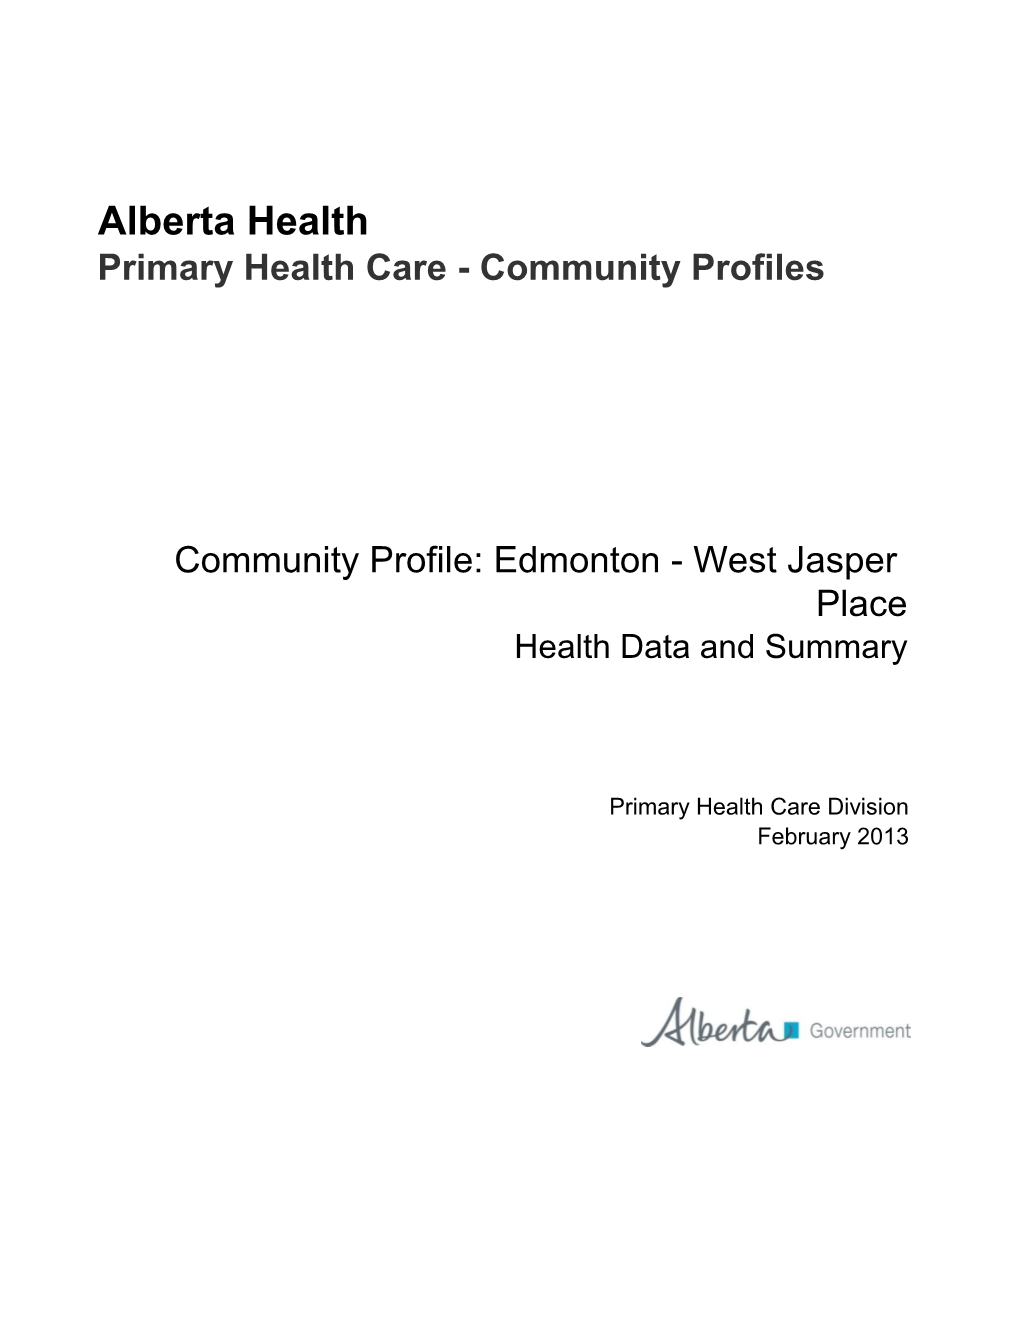 Community Profile: Edmonton - West Jasper Place Health Data and Summary